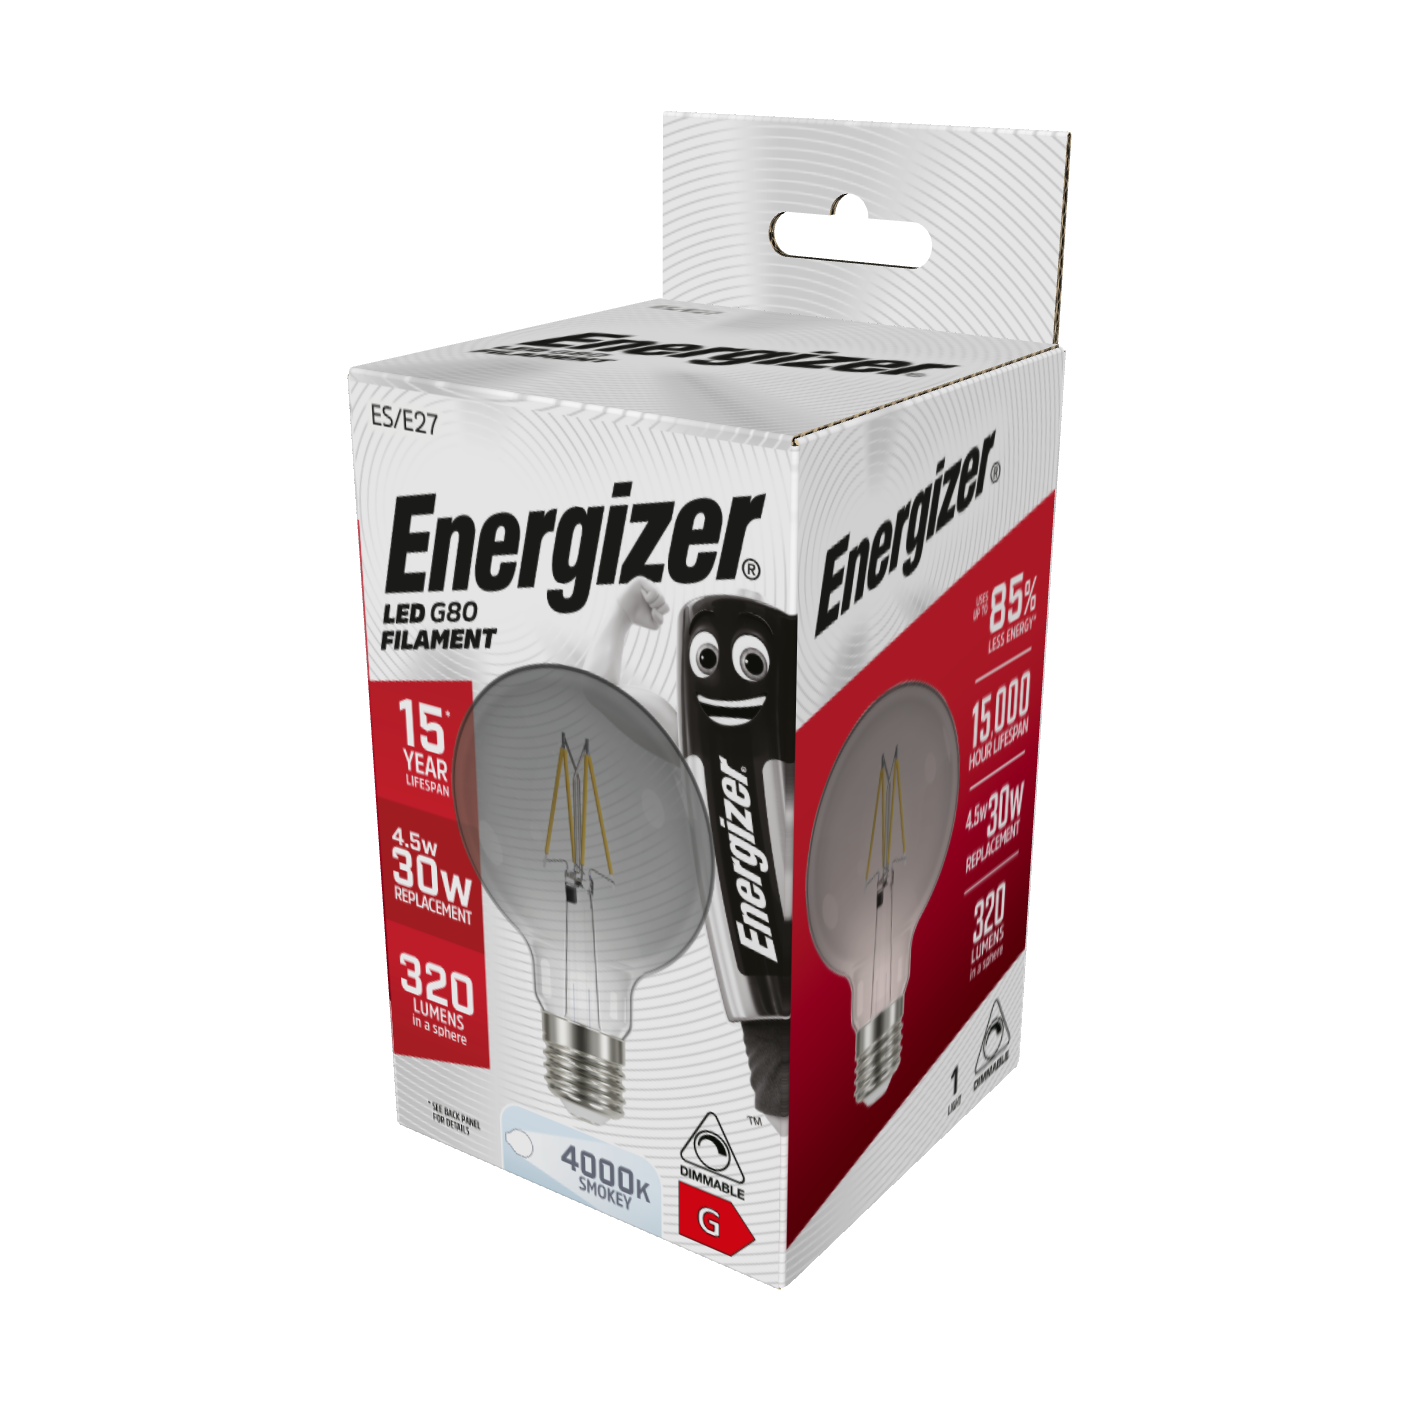 Energizer LED-Filament G80 E27 (ES) Smokey 320 lm 4,5 W 4.000 K (kaltweiß) dimmbar, 1er-Packung